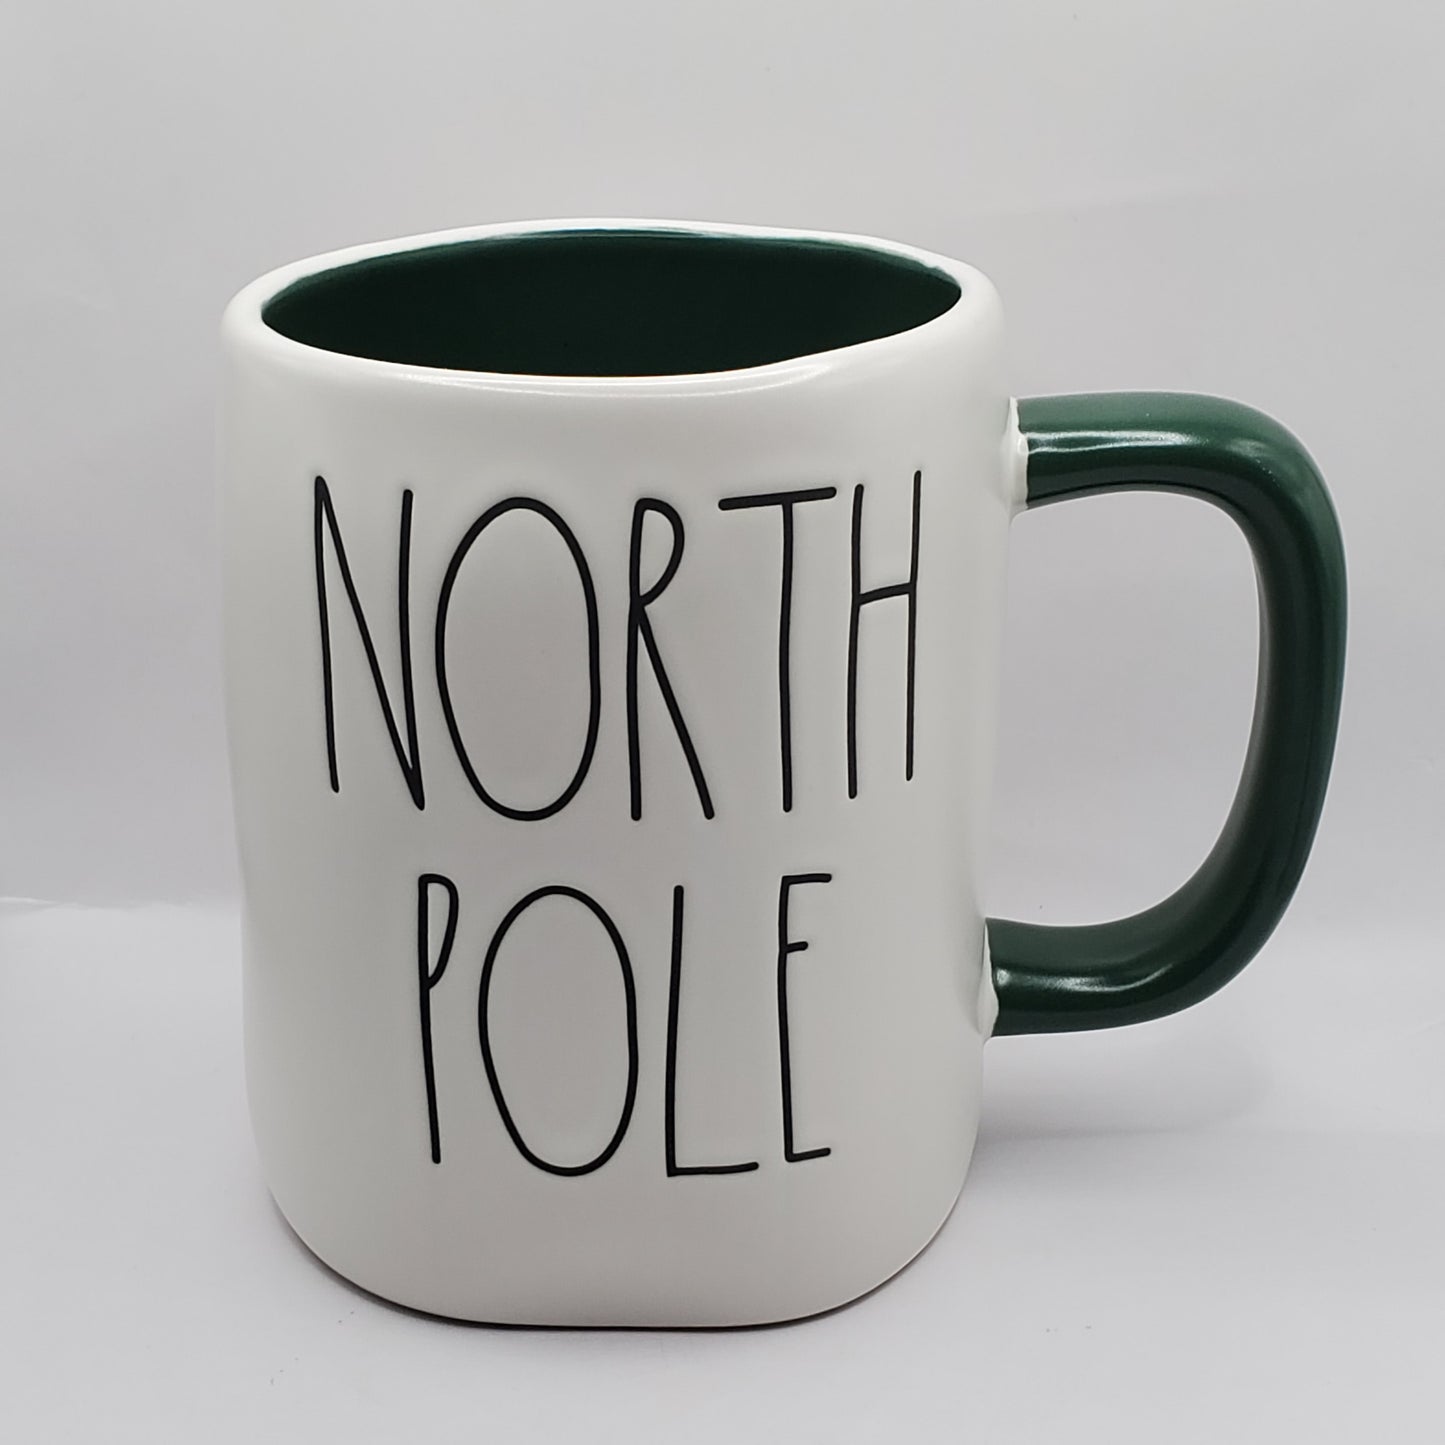 North Pole Mug